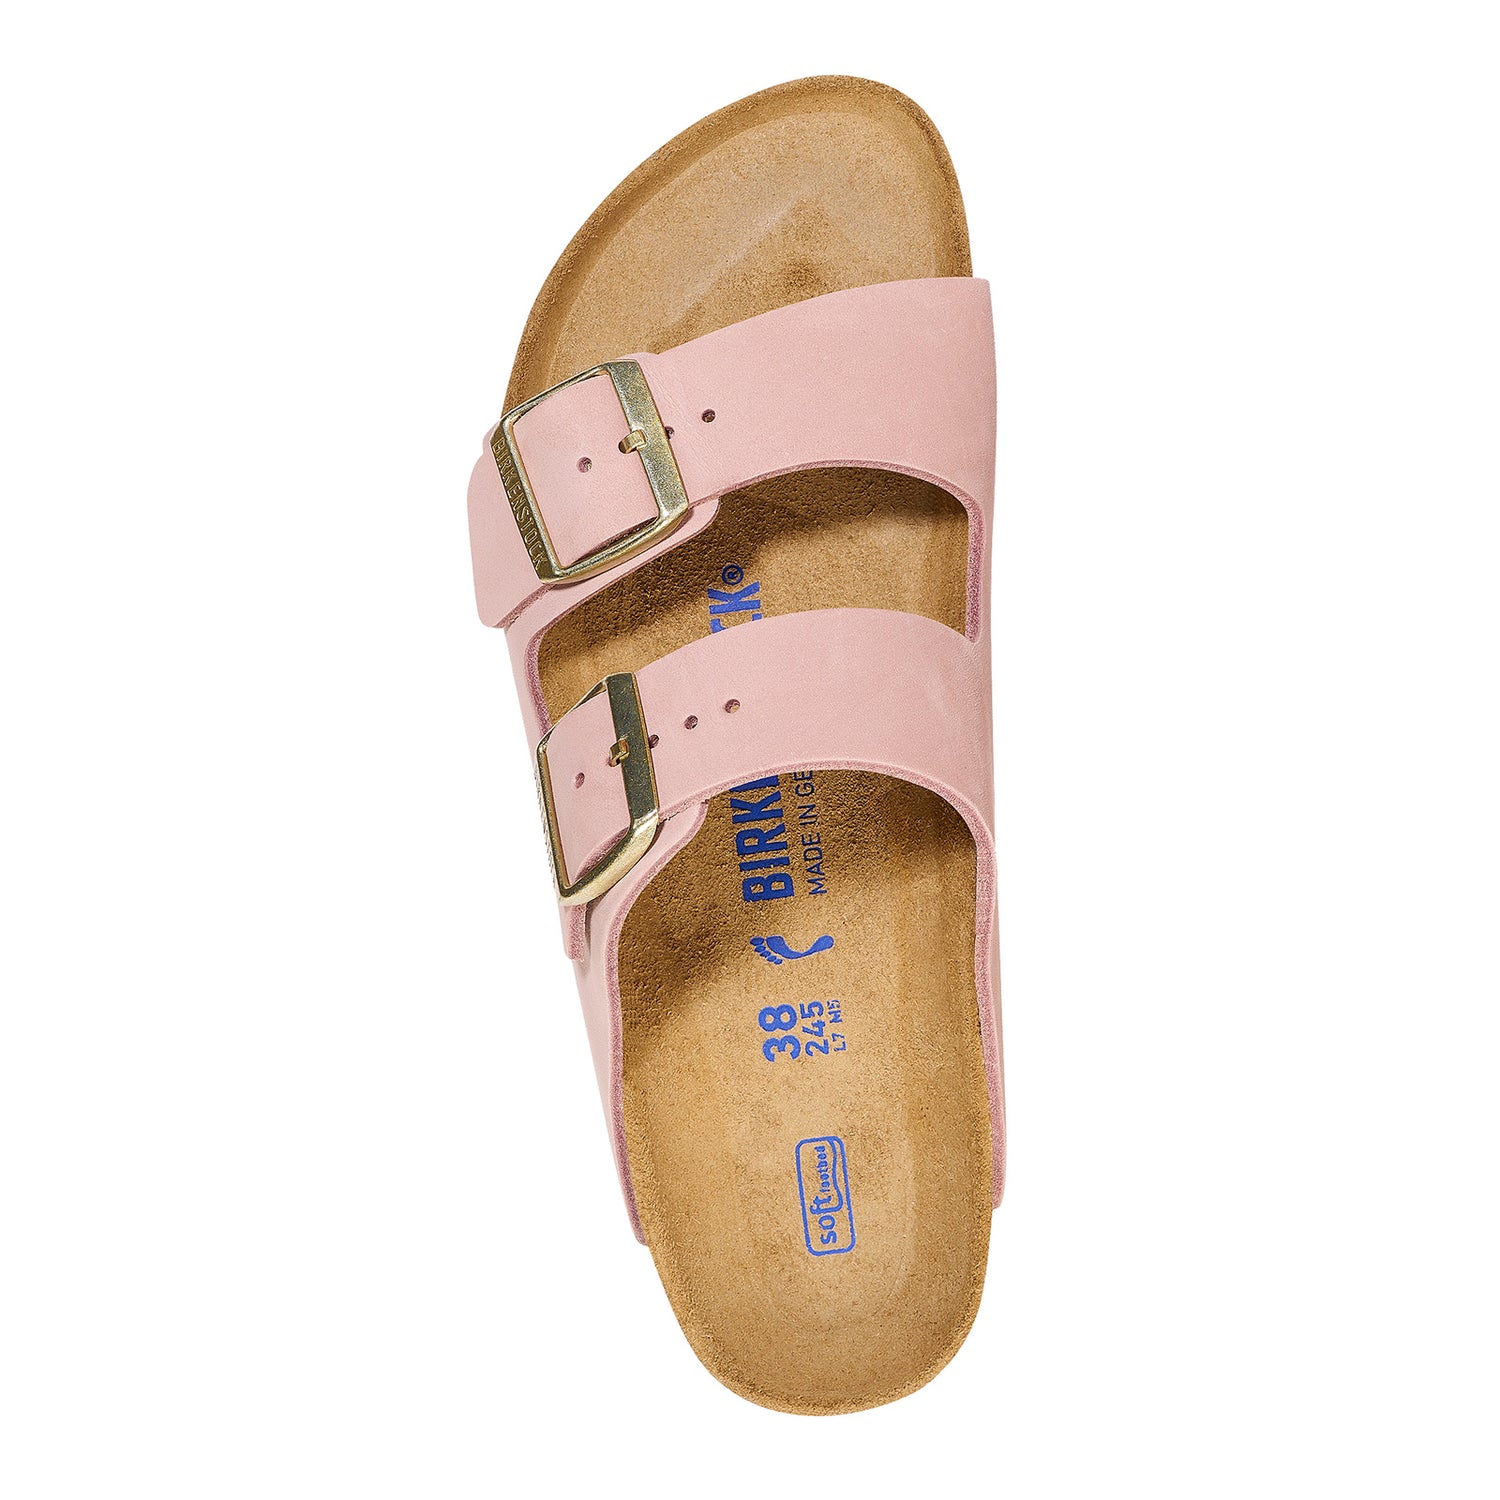 Peltz Shoes  Women's Birkenstock Arizona Soft Footbed Sandal - Narrow Fit Soft Pink Nubuck 1027 661 N